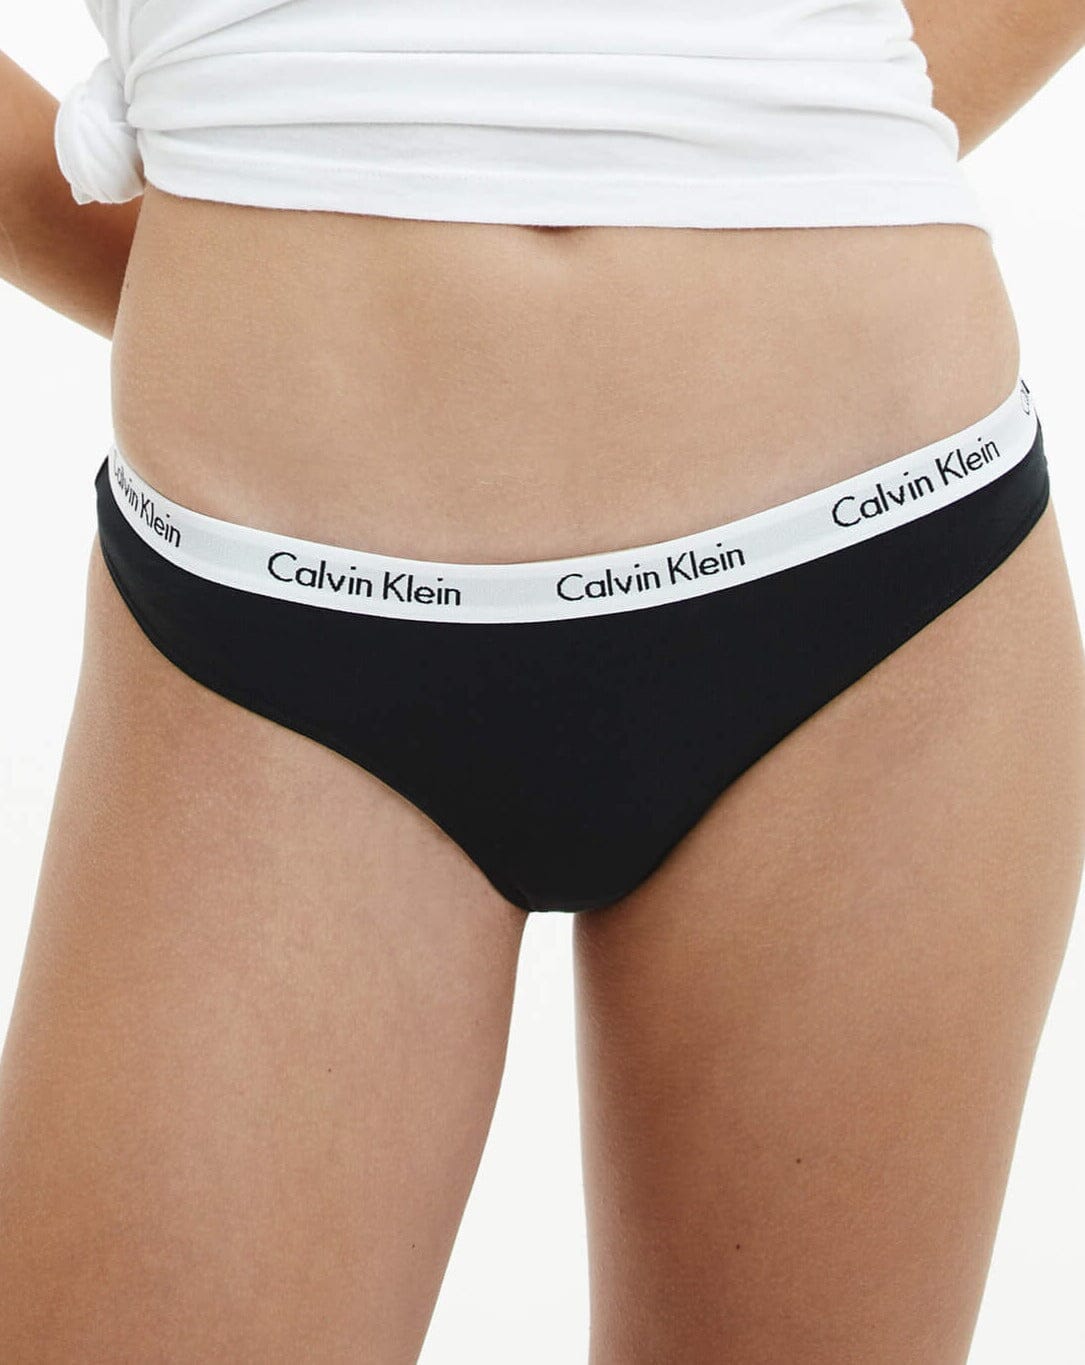 Calvin Klein Carousel 3 Pack Bikini Brief - Black/Grey Heather